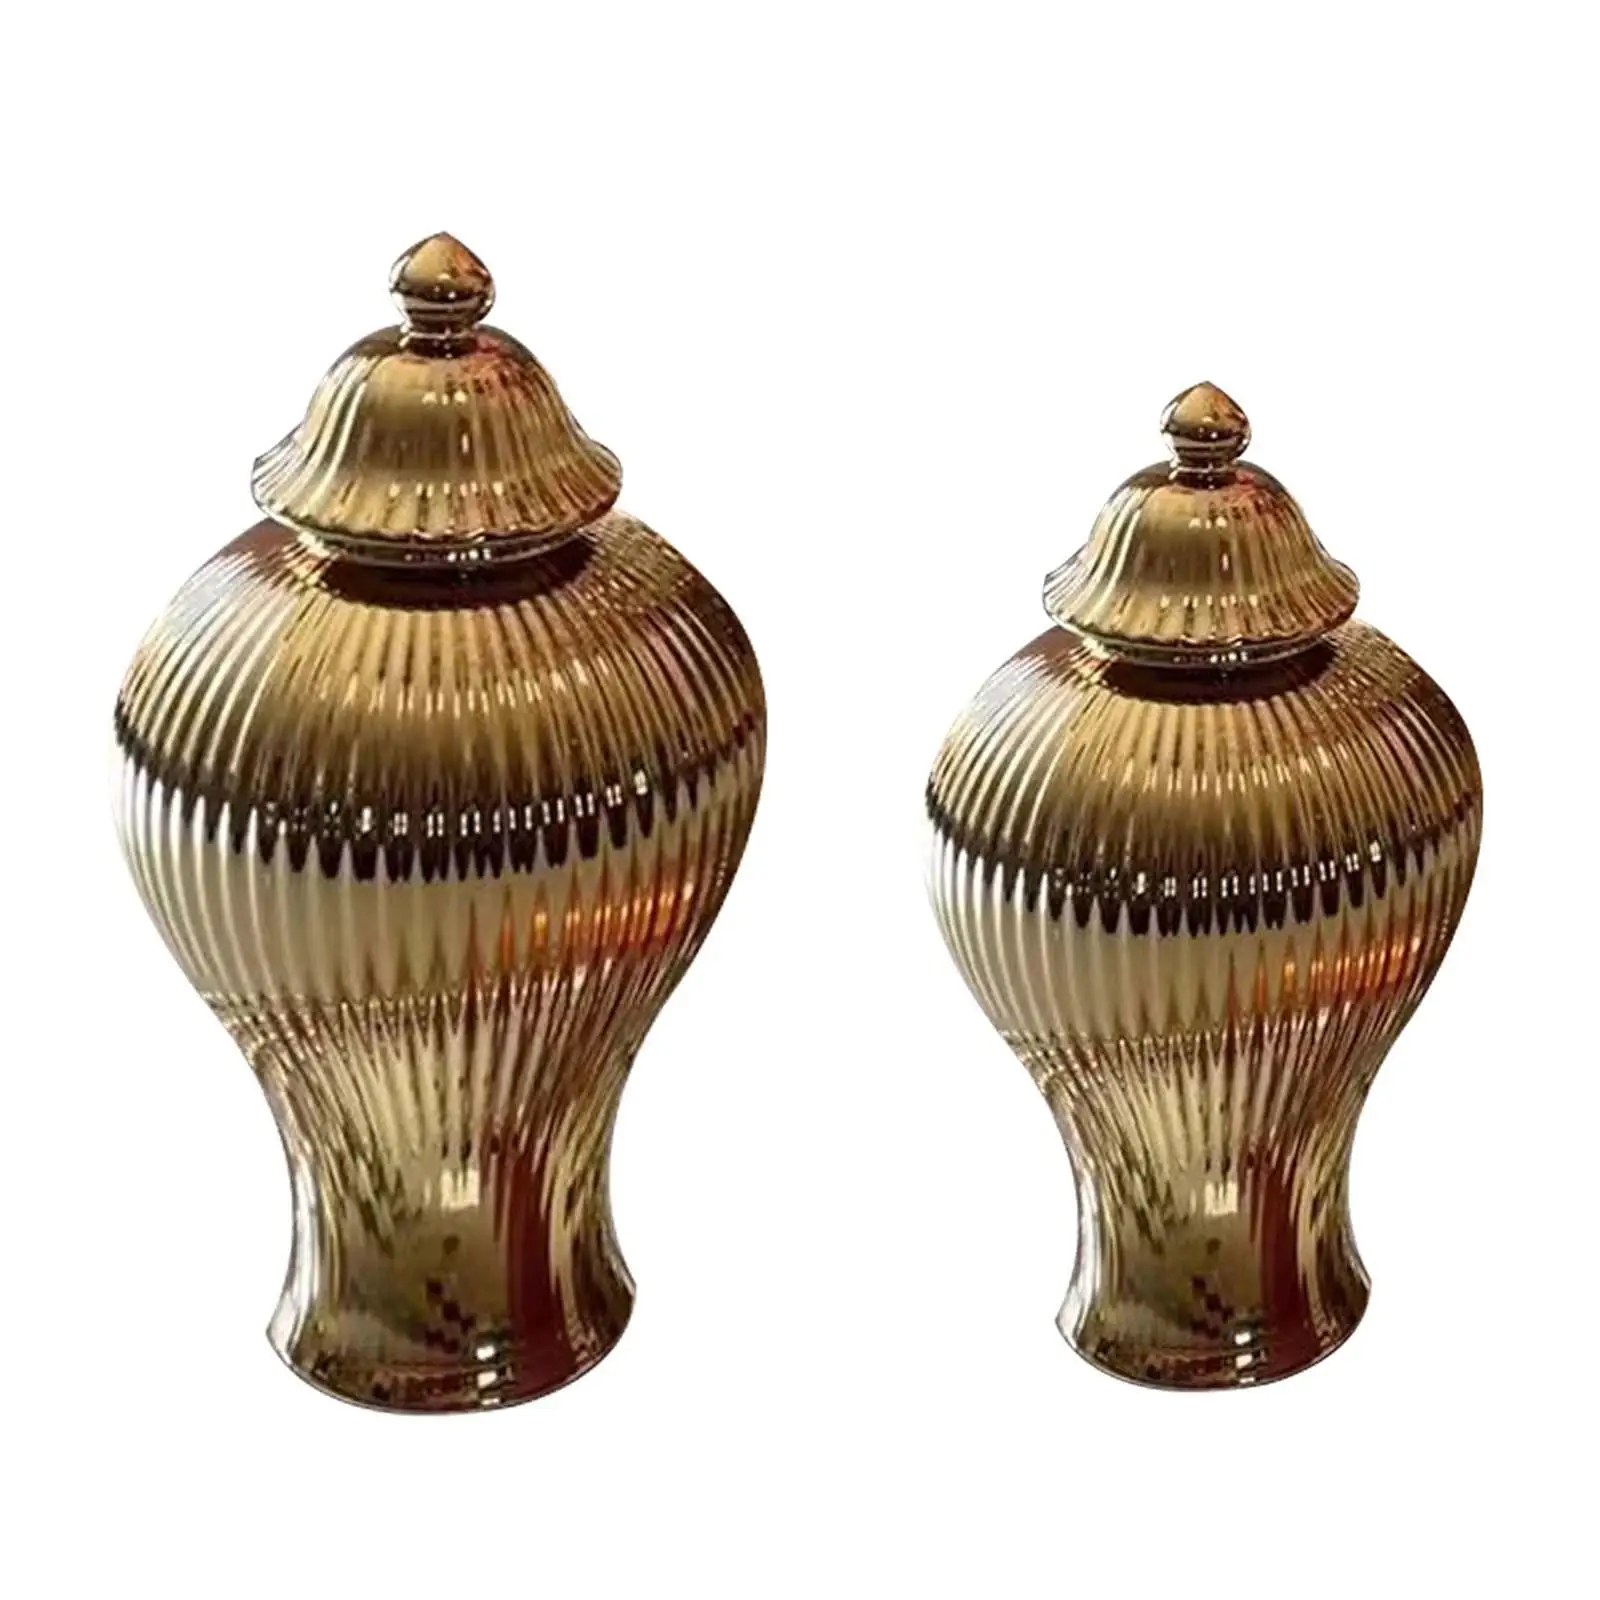 Modern Ceramic Flower Jar Decorative Jar Ginger Jar with Lid Temple Jar for Centerpiece Party Holiday Gifts